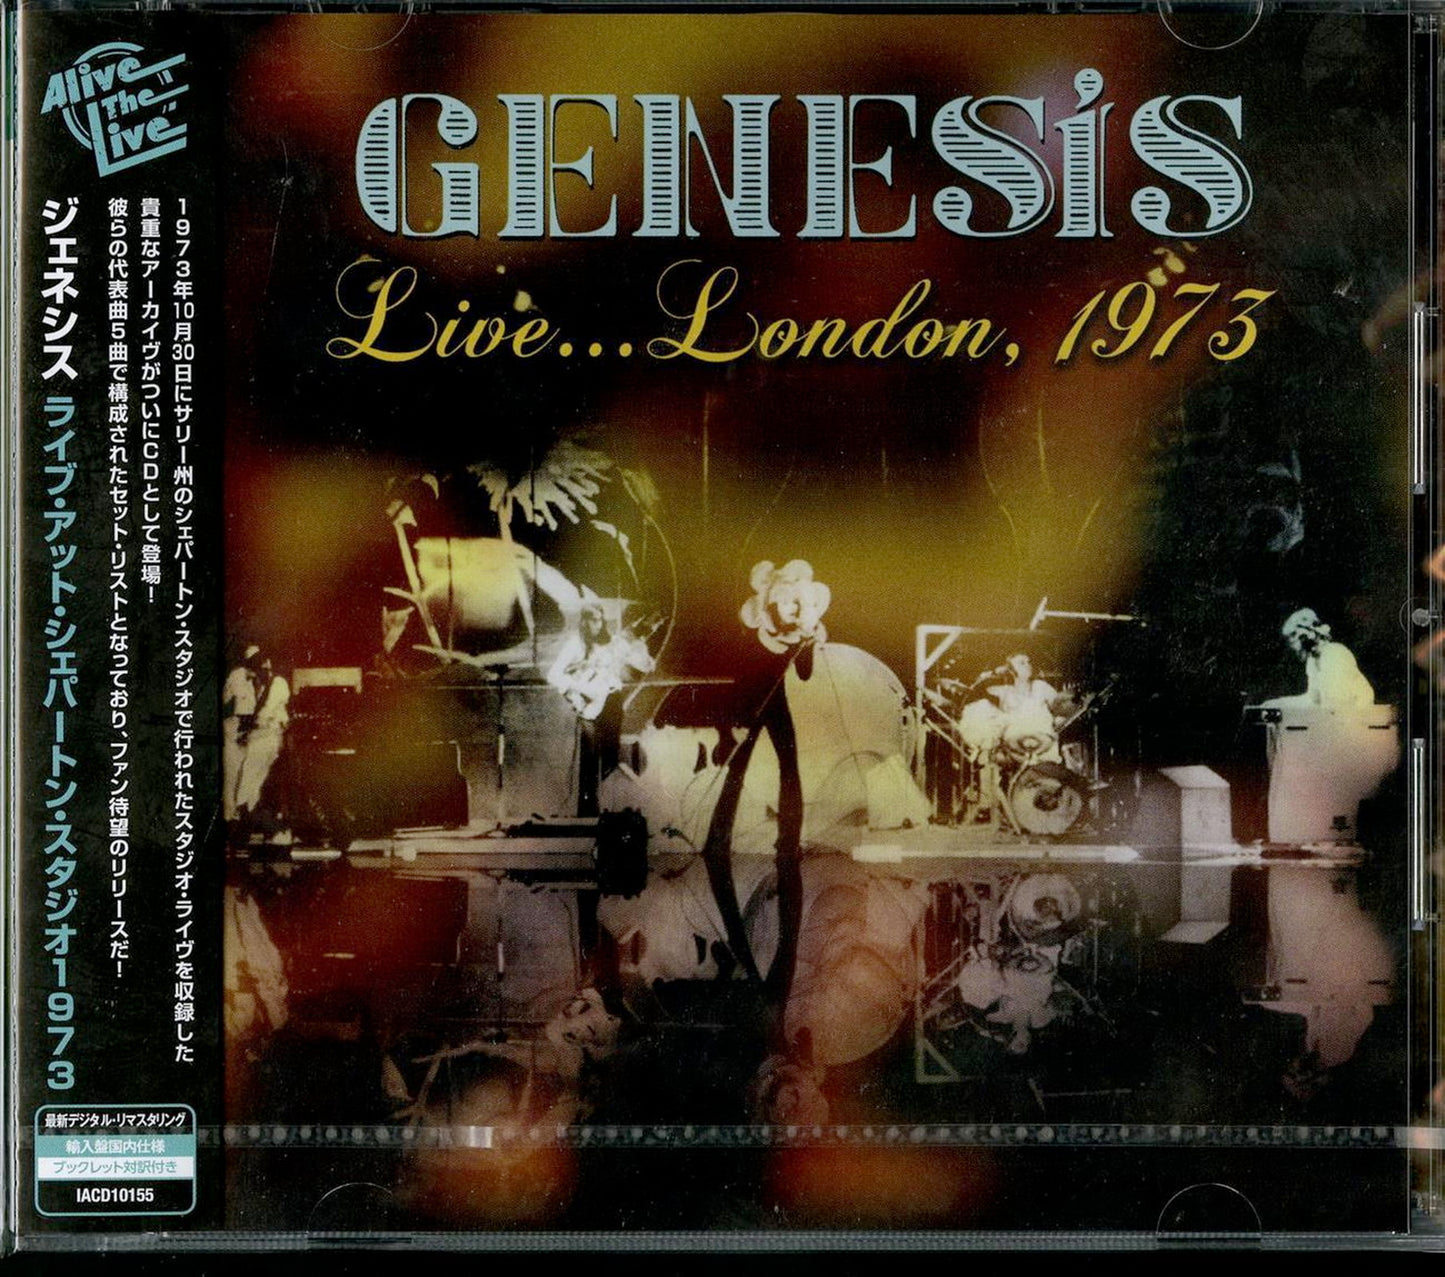 Genesis - Live At Shepperton 1973 - Import CD